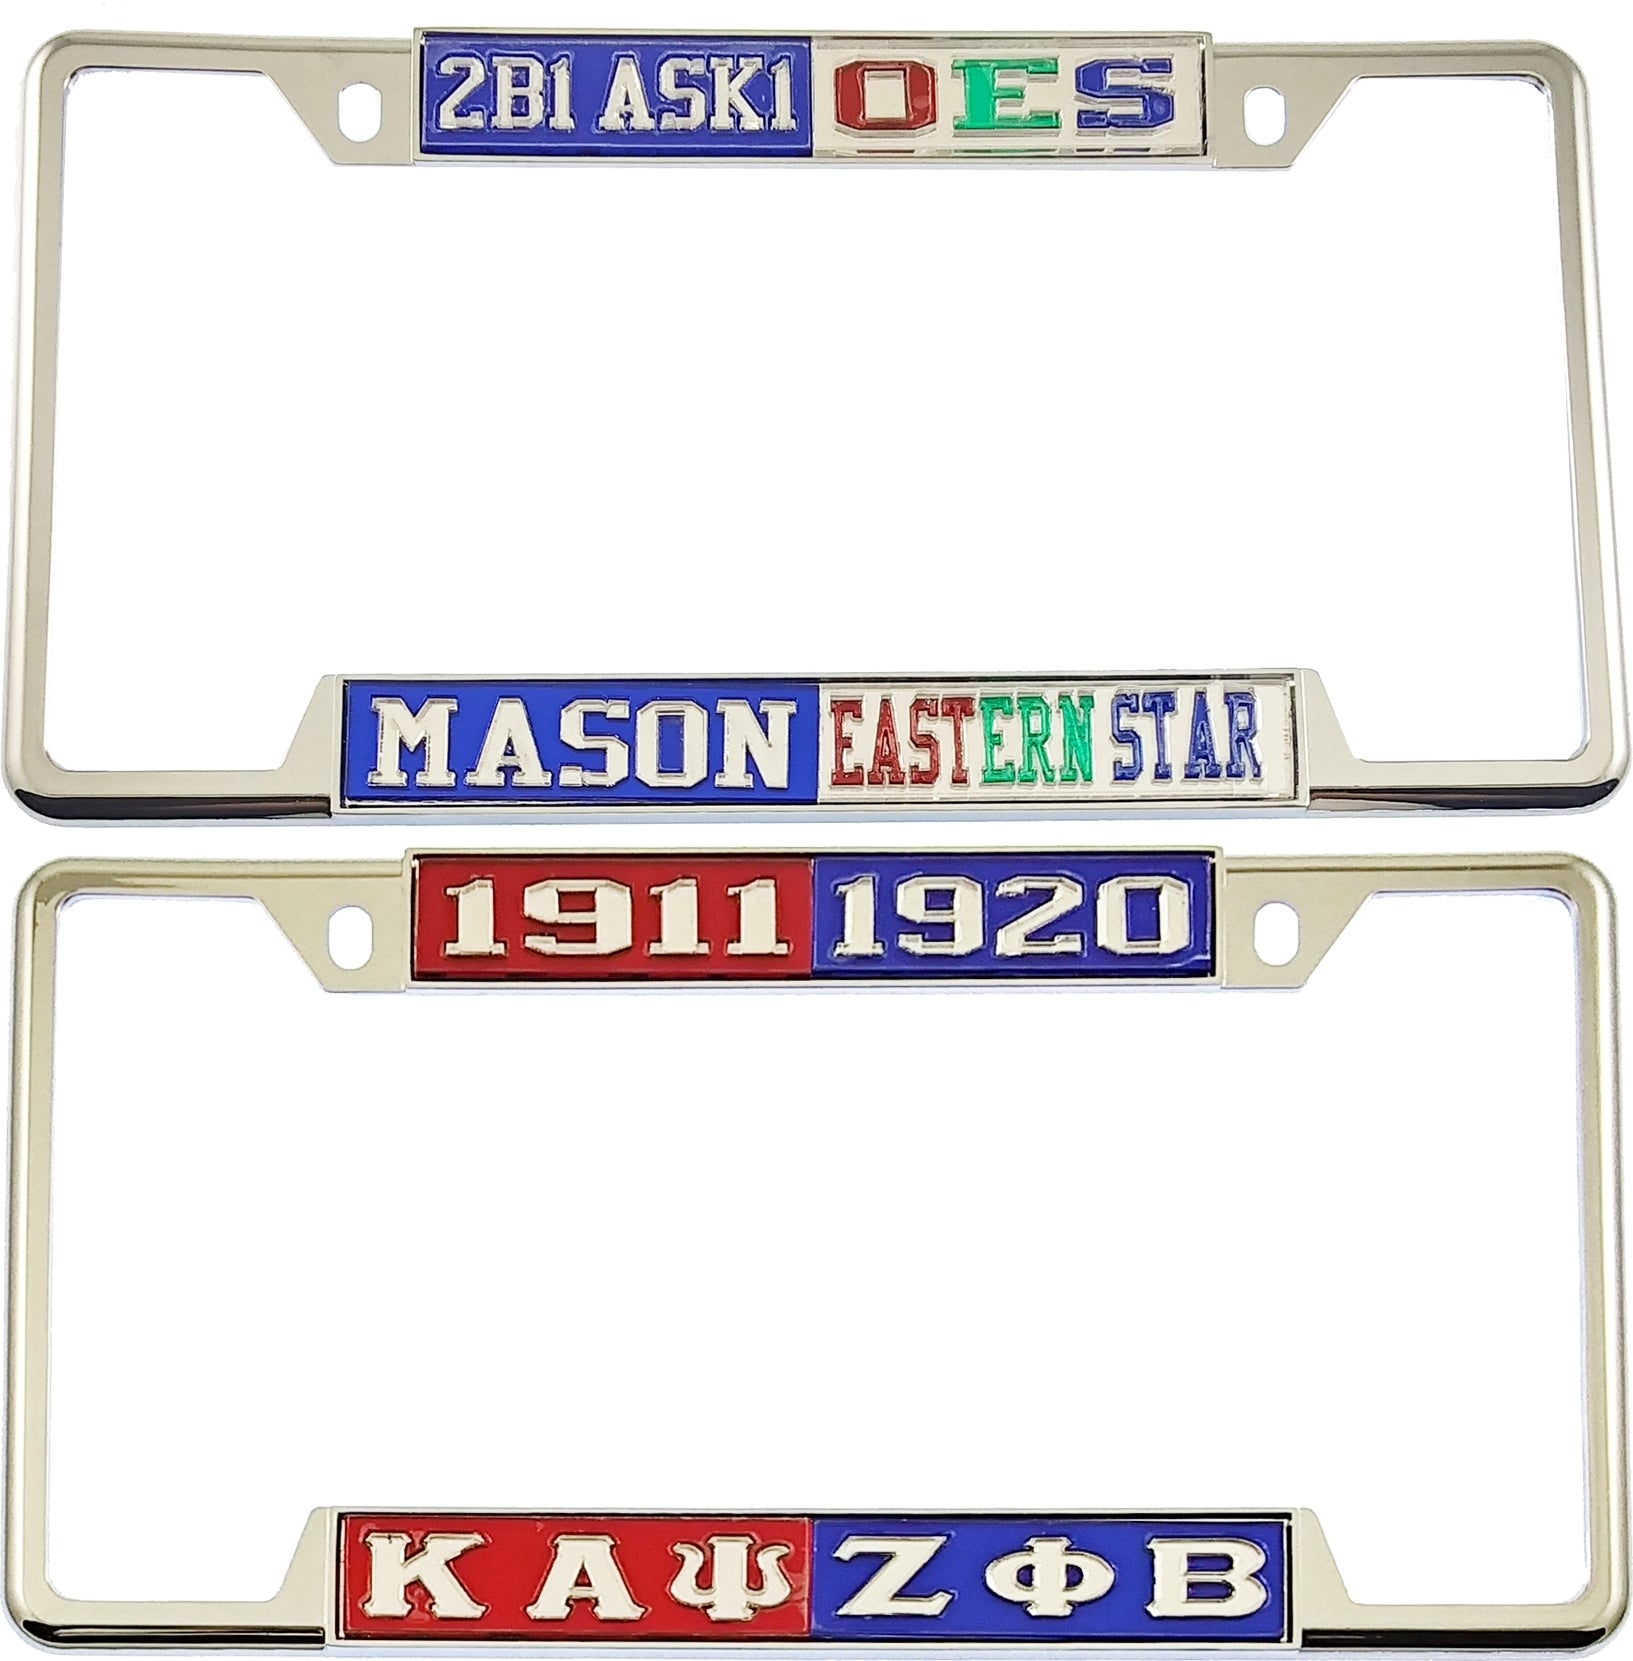 Mason - PHA > Silver/Blue Split License Plate Frame [Car or Truck - Decal Visible Frame]